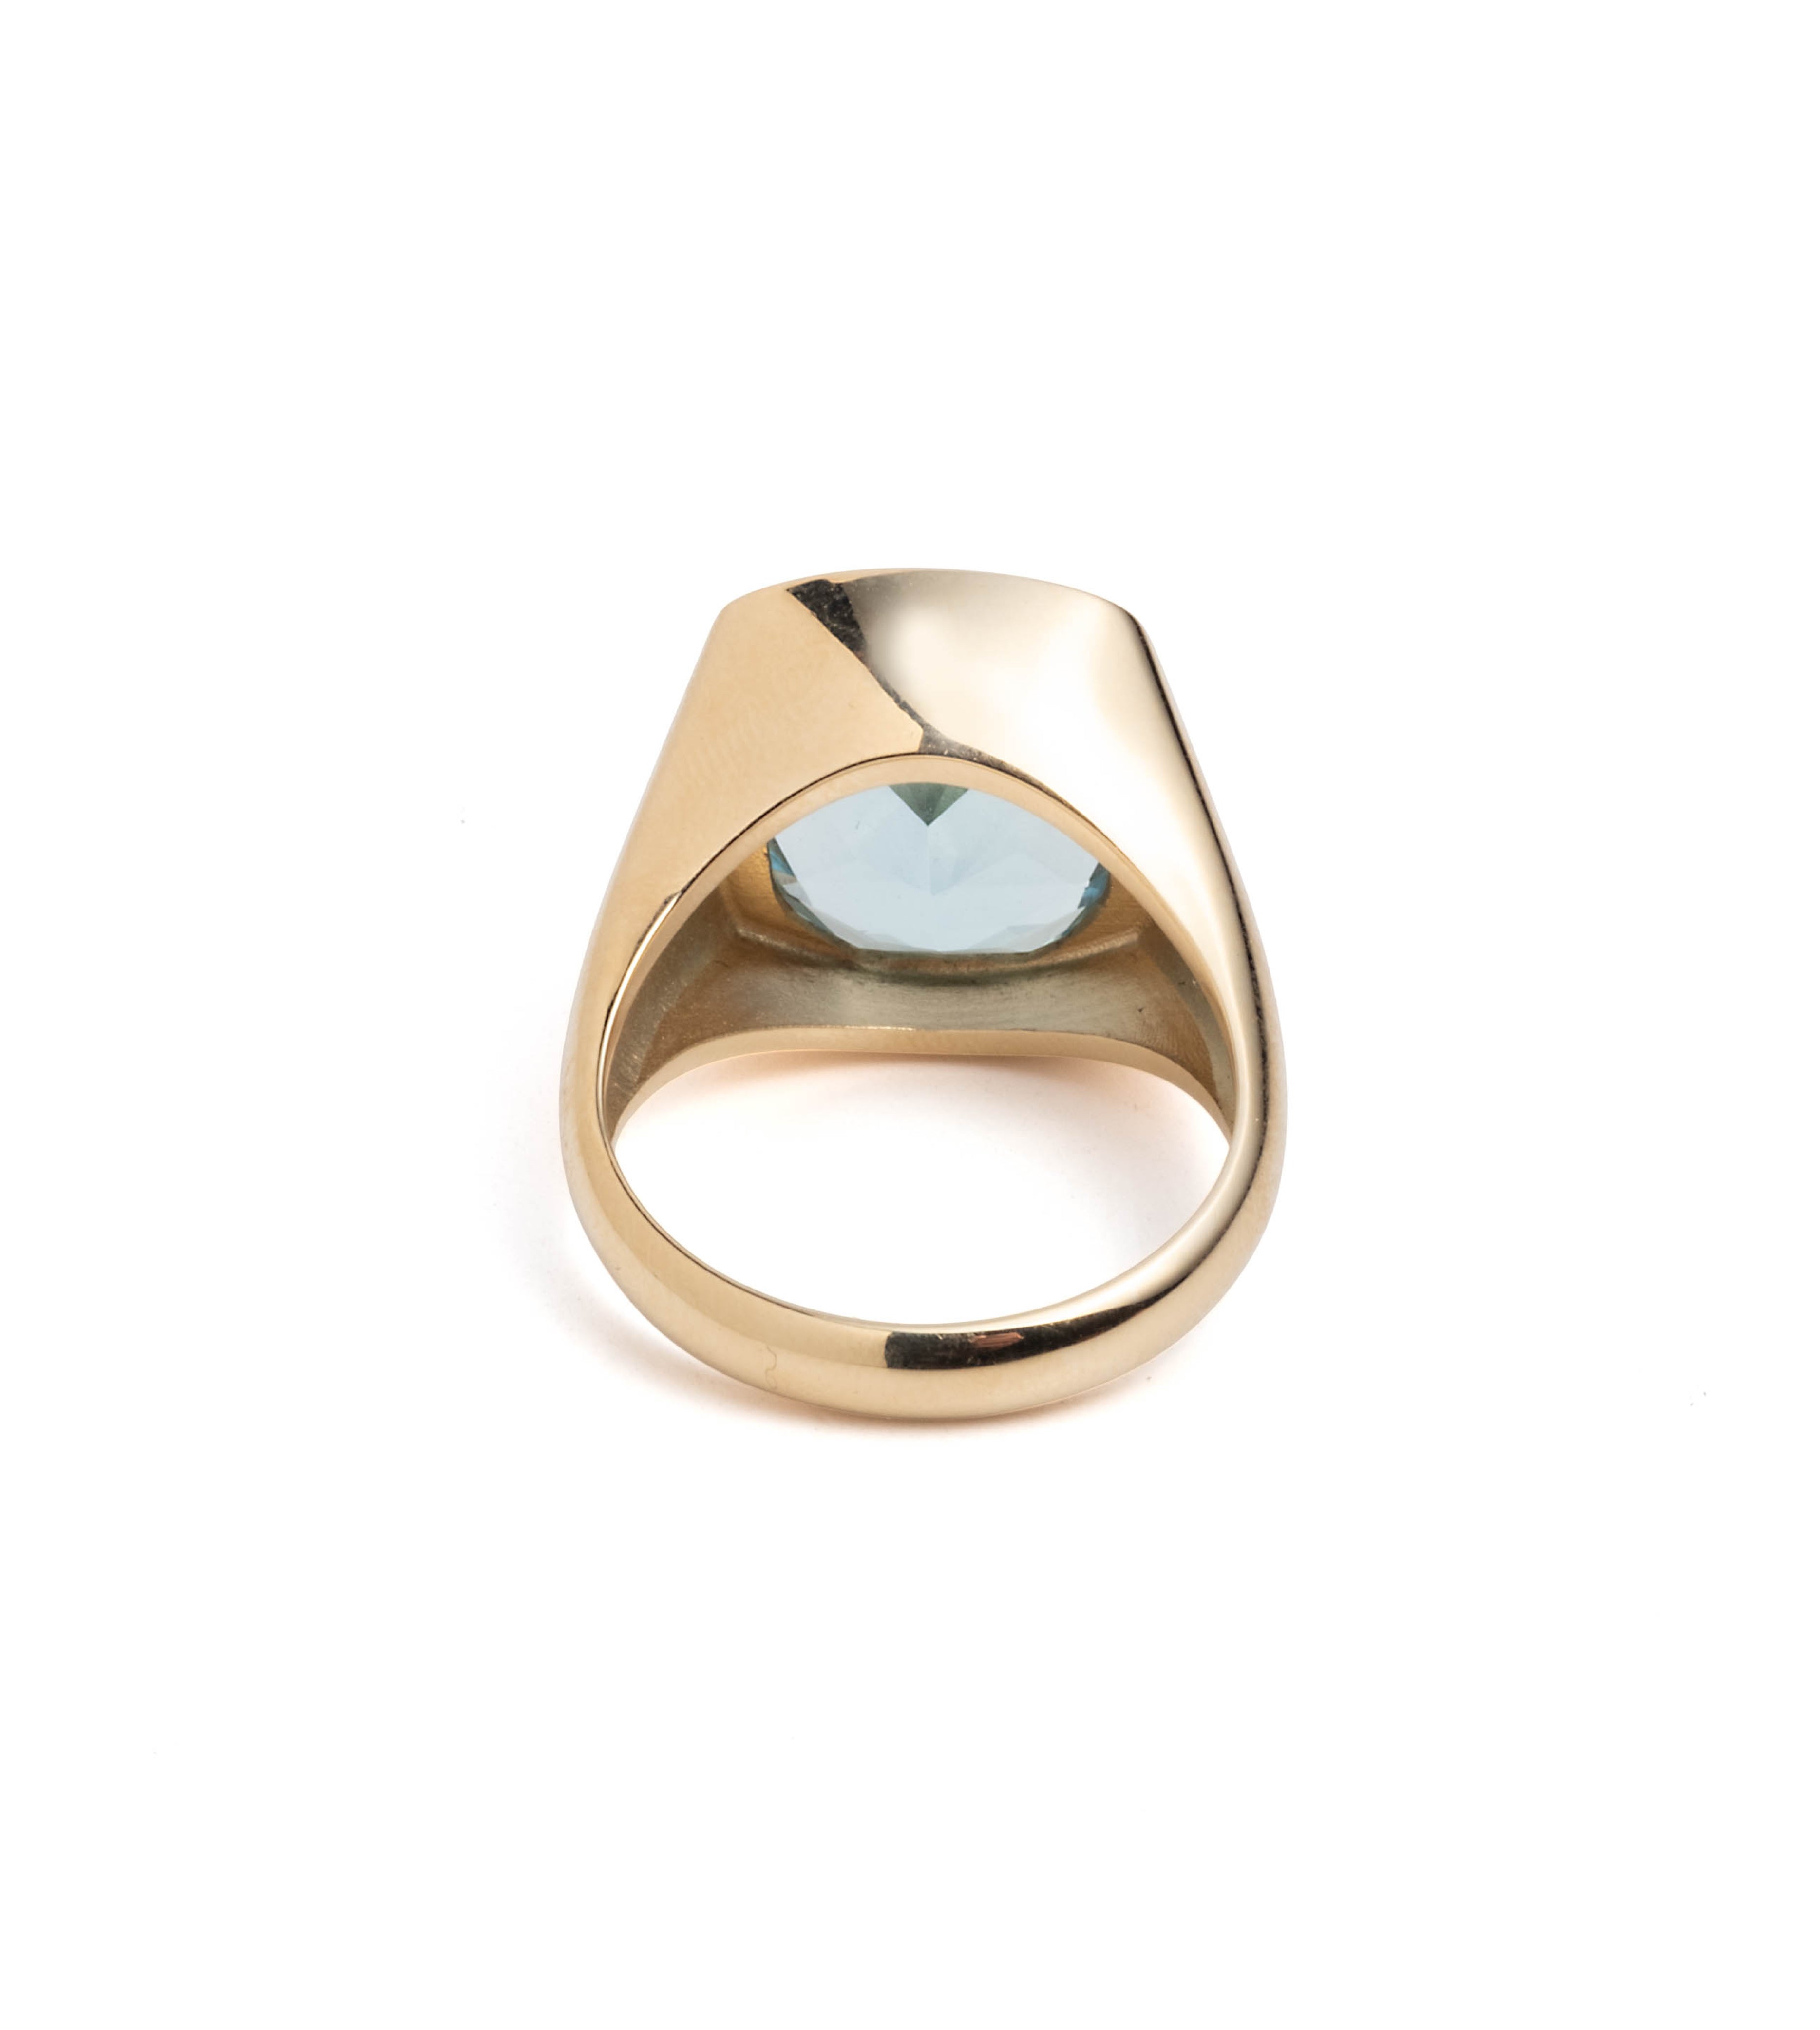 9.9ct Aquamarine - Reverie : One of A Kind Gemstone Ring